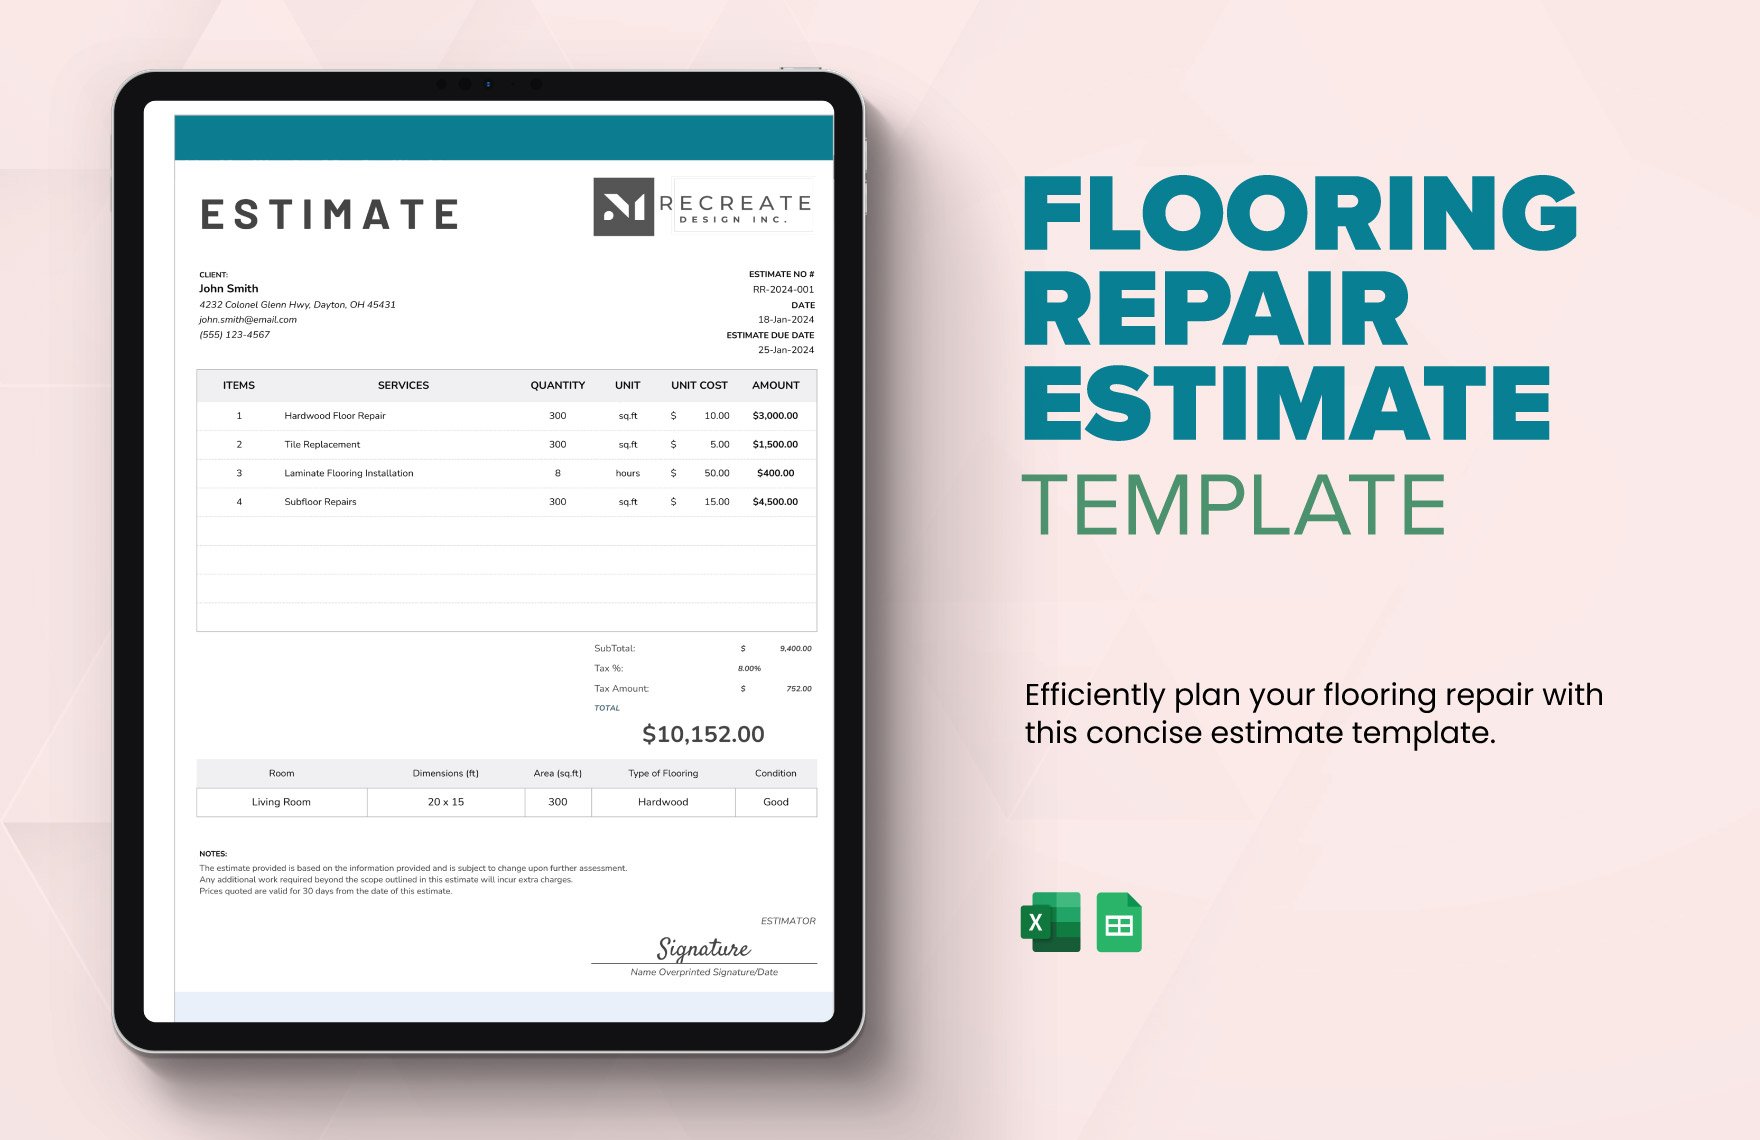 Flooring Repair Estimate Template